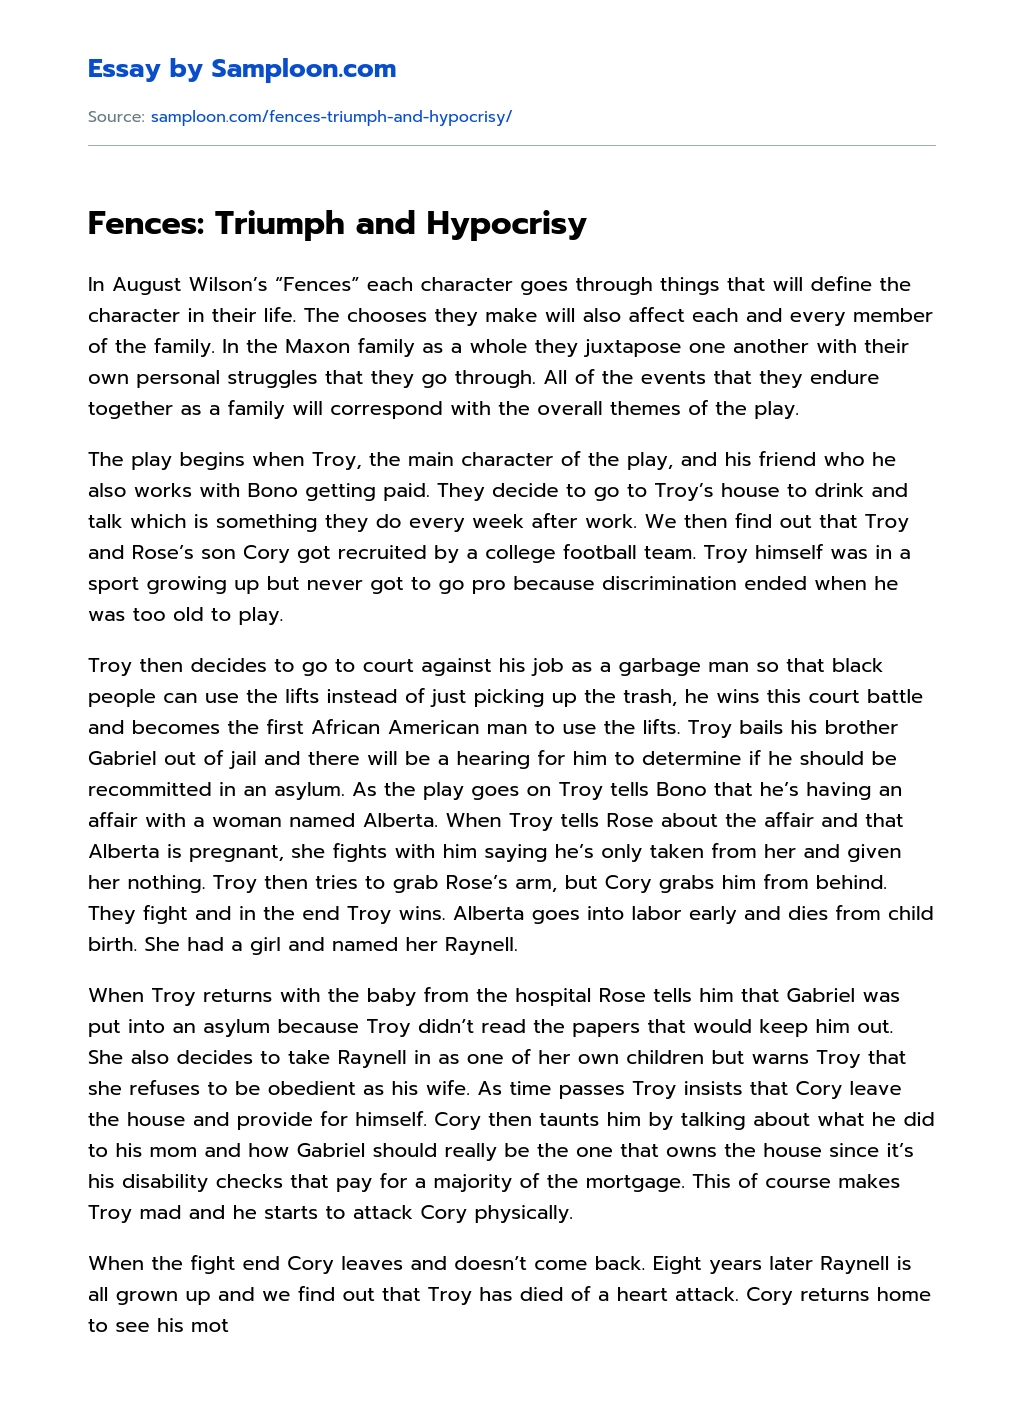 Fences: Triumph and Hypocrisy  essay